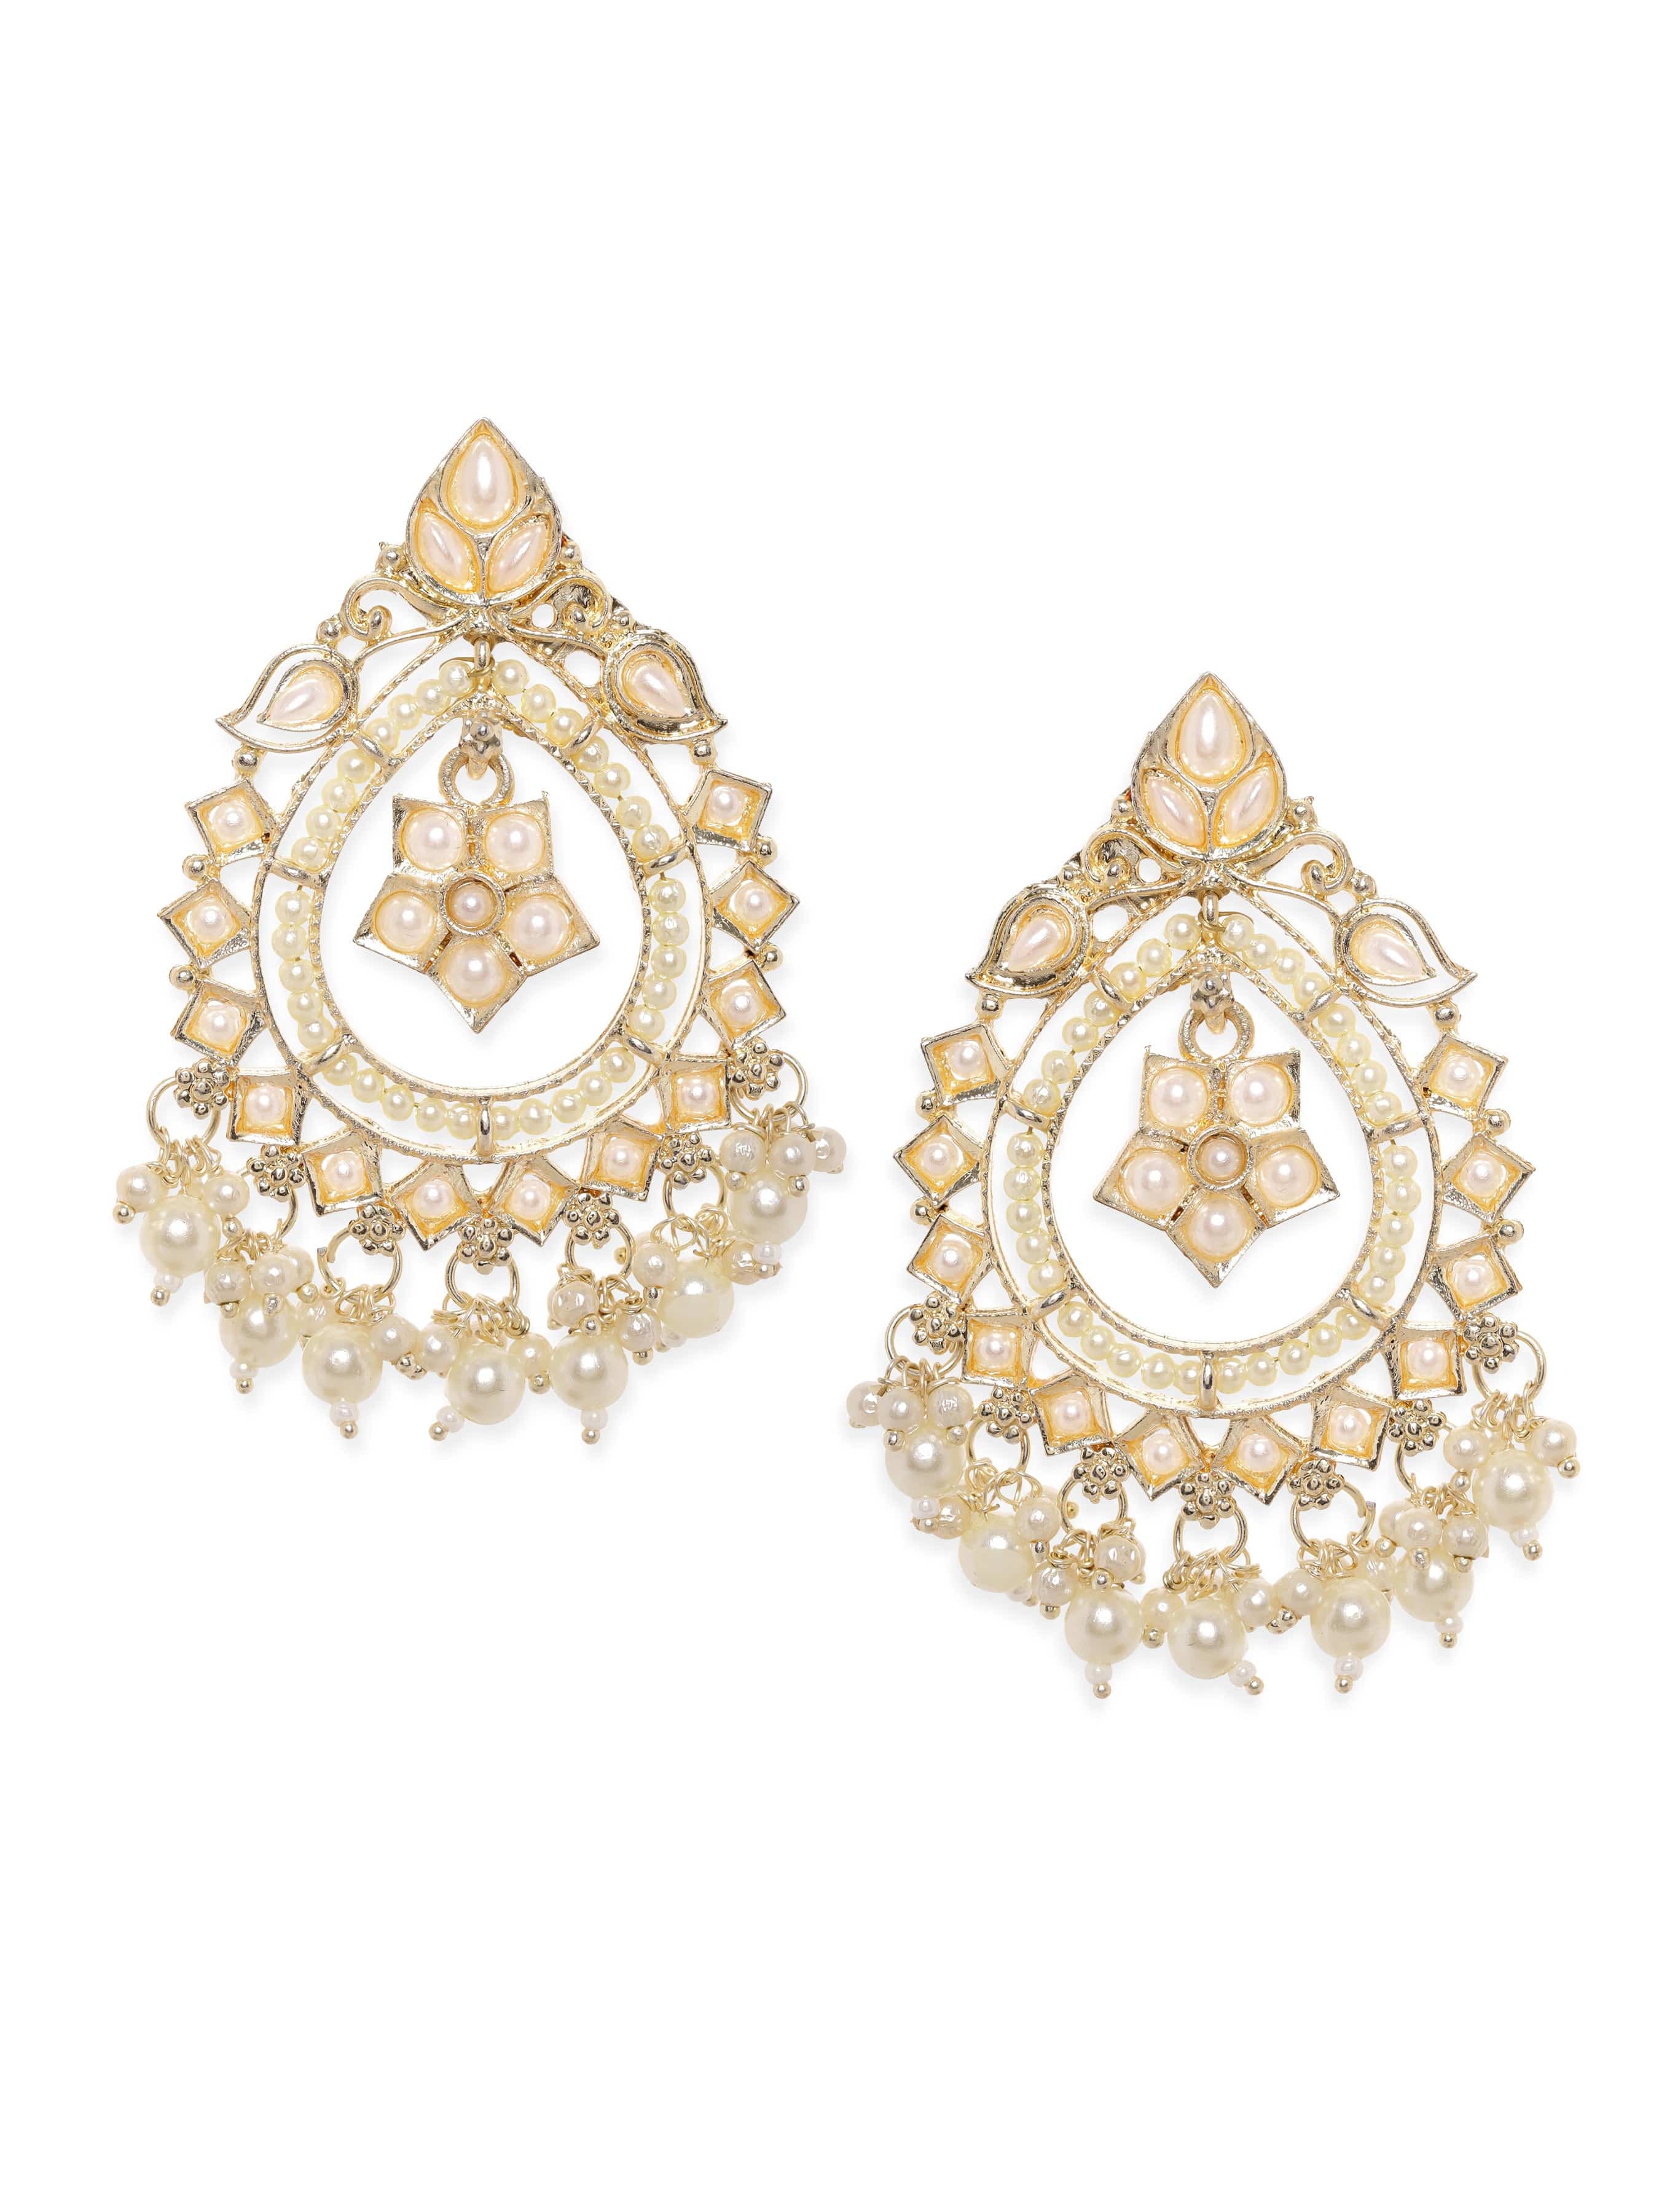 Rubans Chandelier Earrings with Small White Beads Earrings